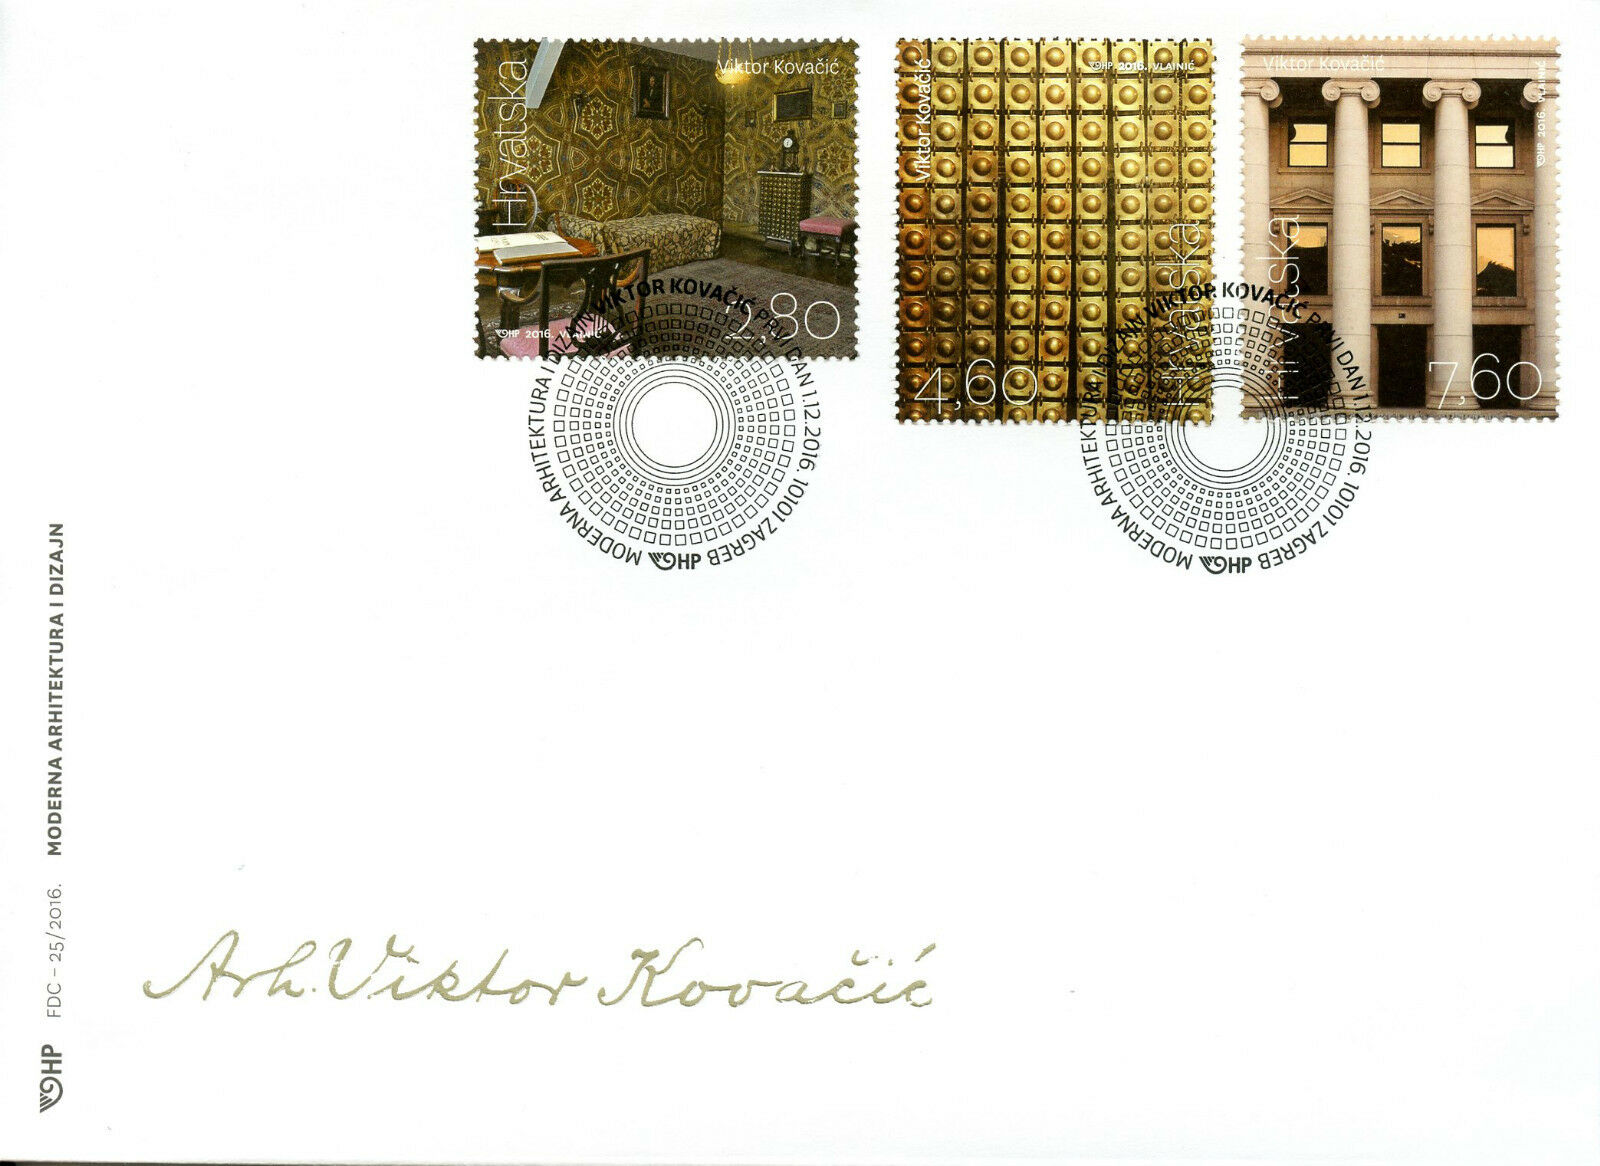 Croatia 2016 FDC Modern Architecture & Design Viktor Kovacic 3v Cover Stamps